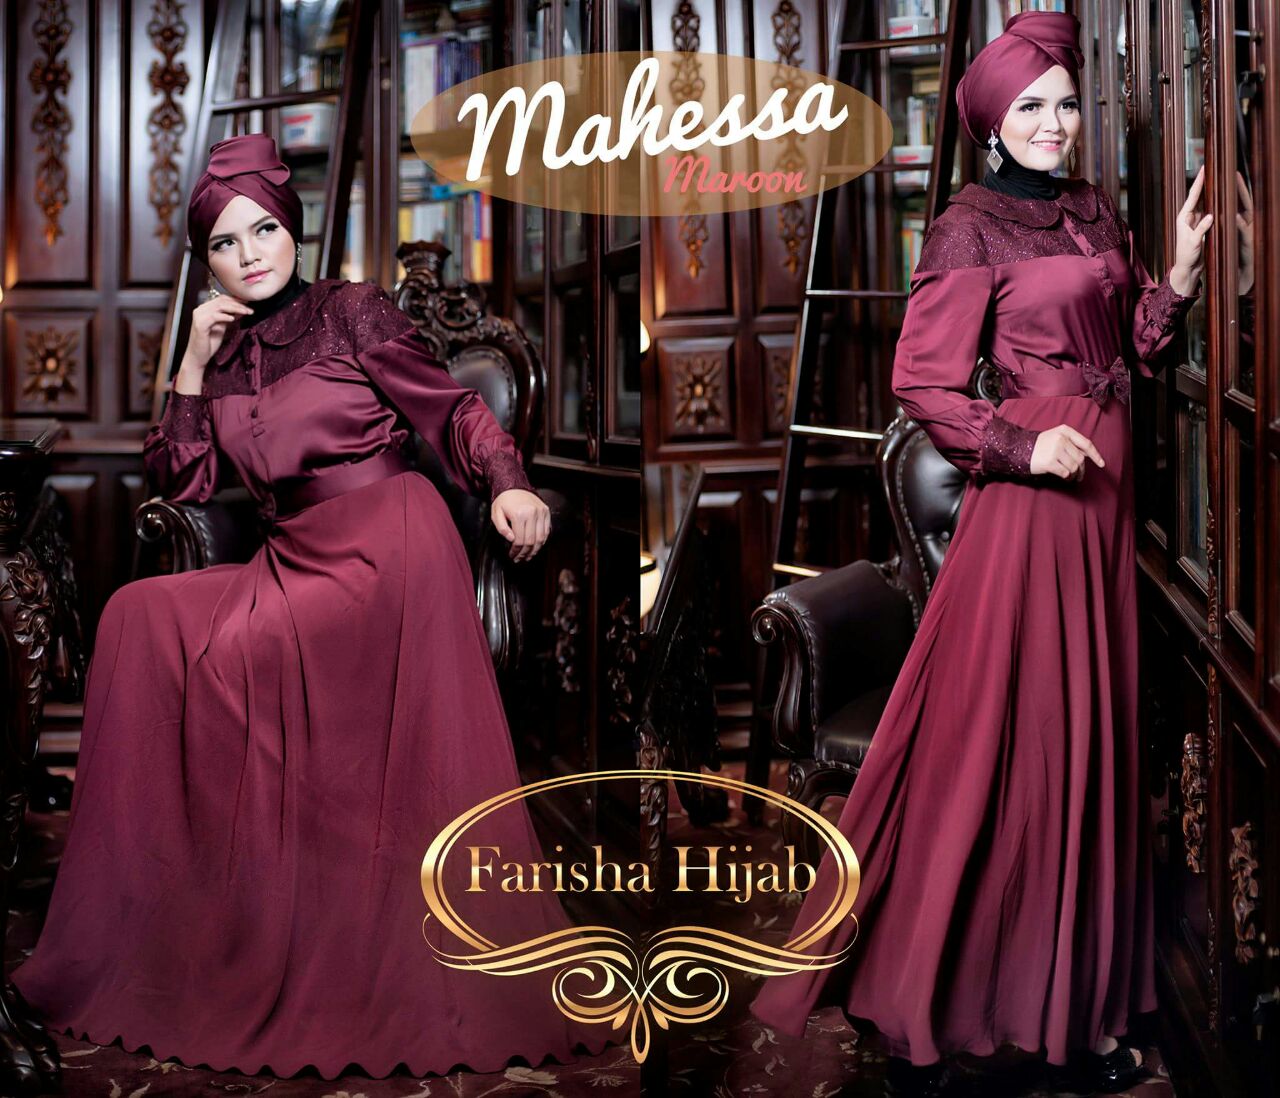 Mahessa Dress By Farisha Hijab Jual Busana Muslimah Cantik Modern Love Hijab Indo 085230801919 28329jpg